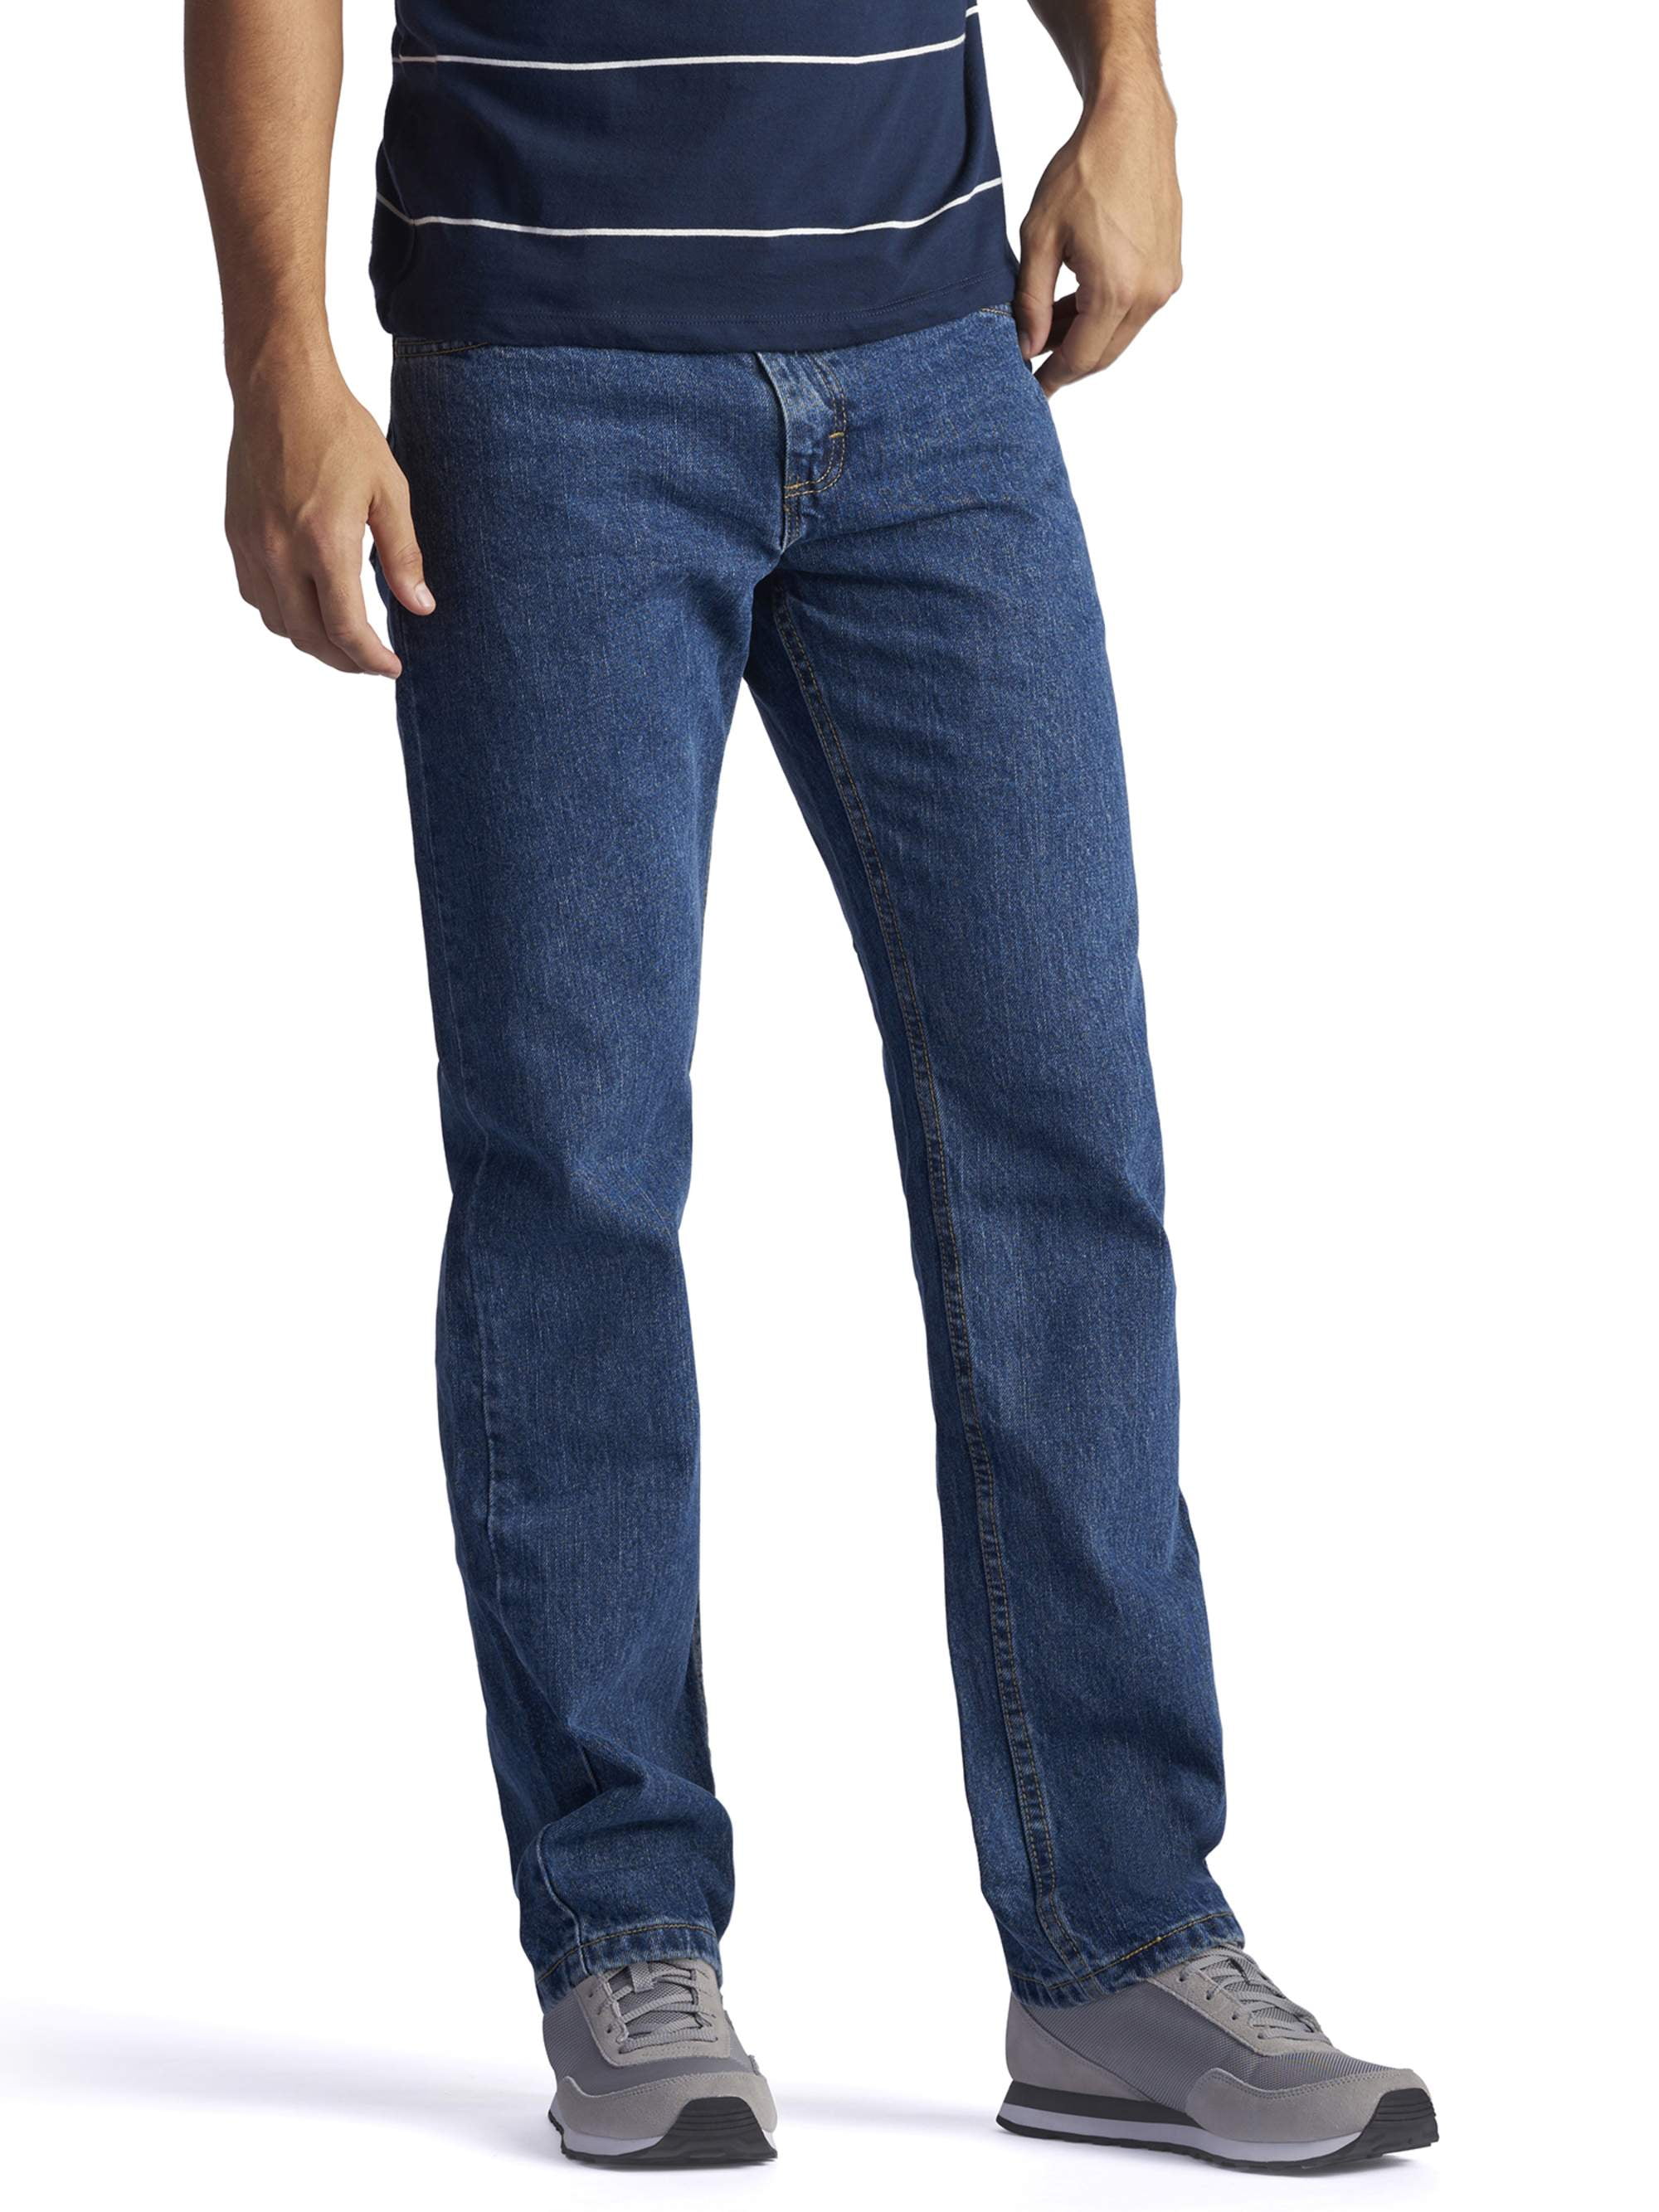 Lee - Lee Men's Relaxed Fit Jeans - Walmart.com - Walmart.com